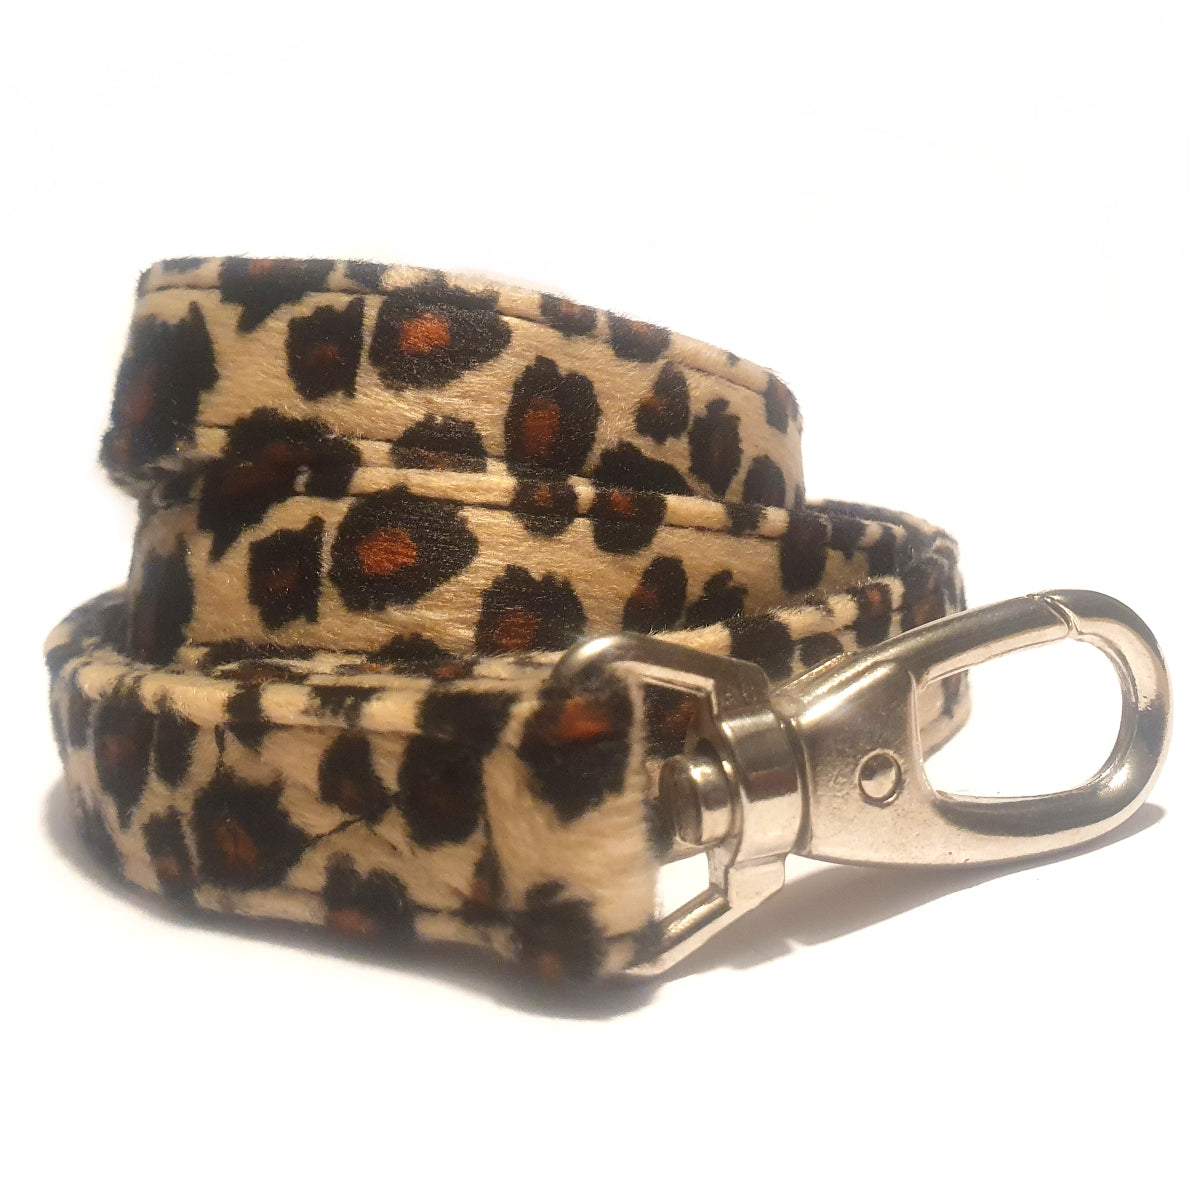 Leopard Print Dog Collar & Lead Sets